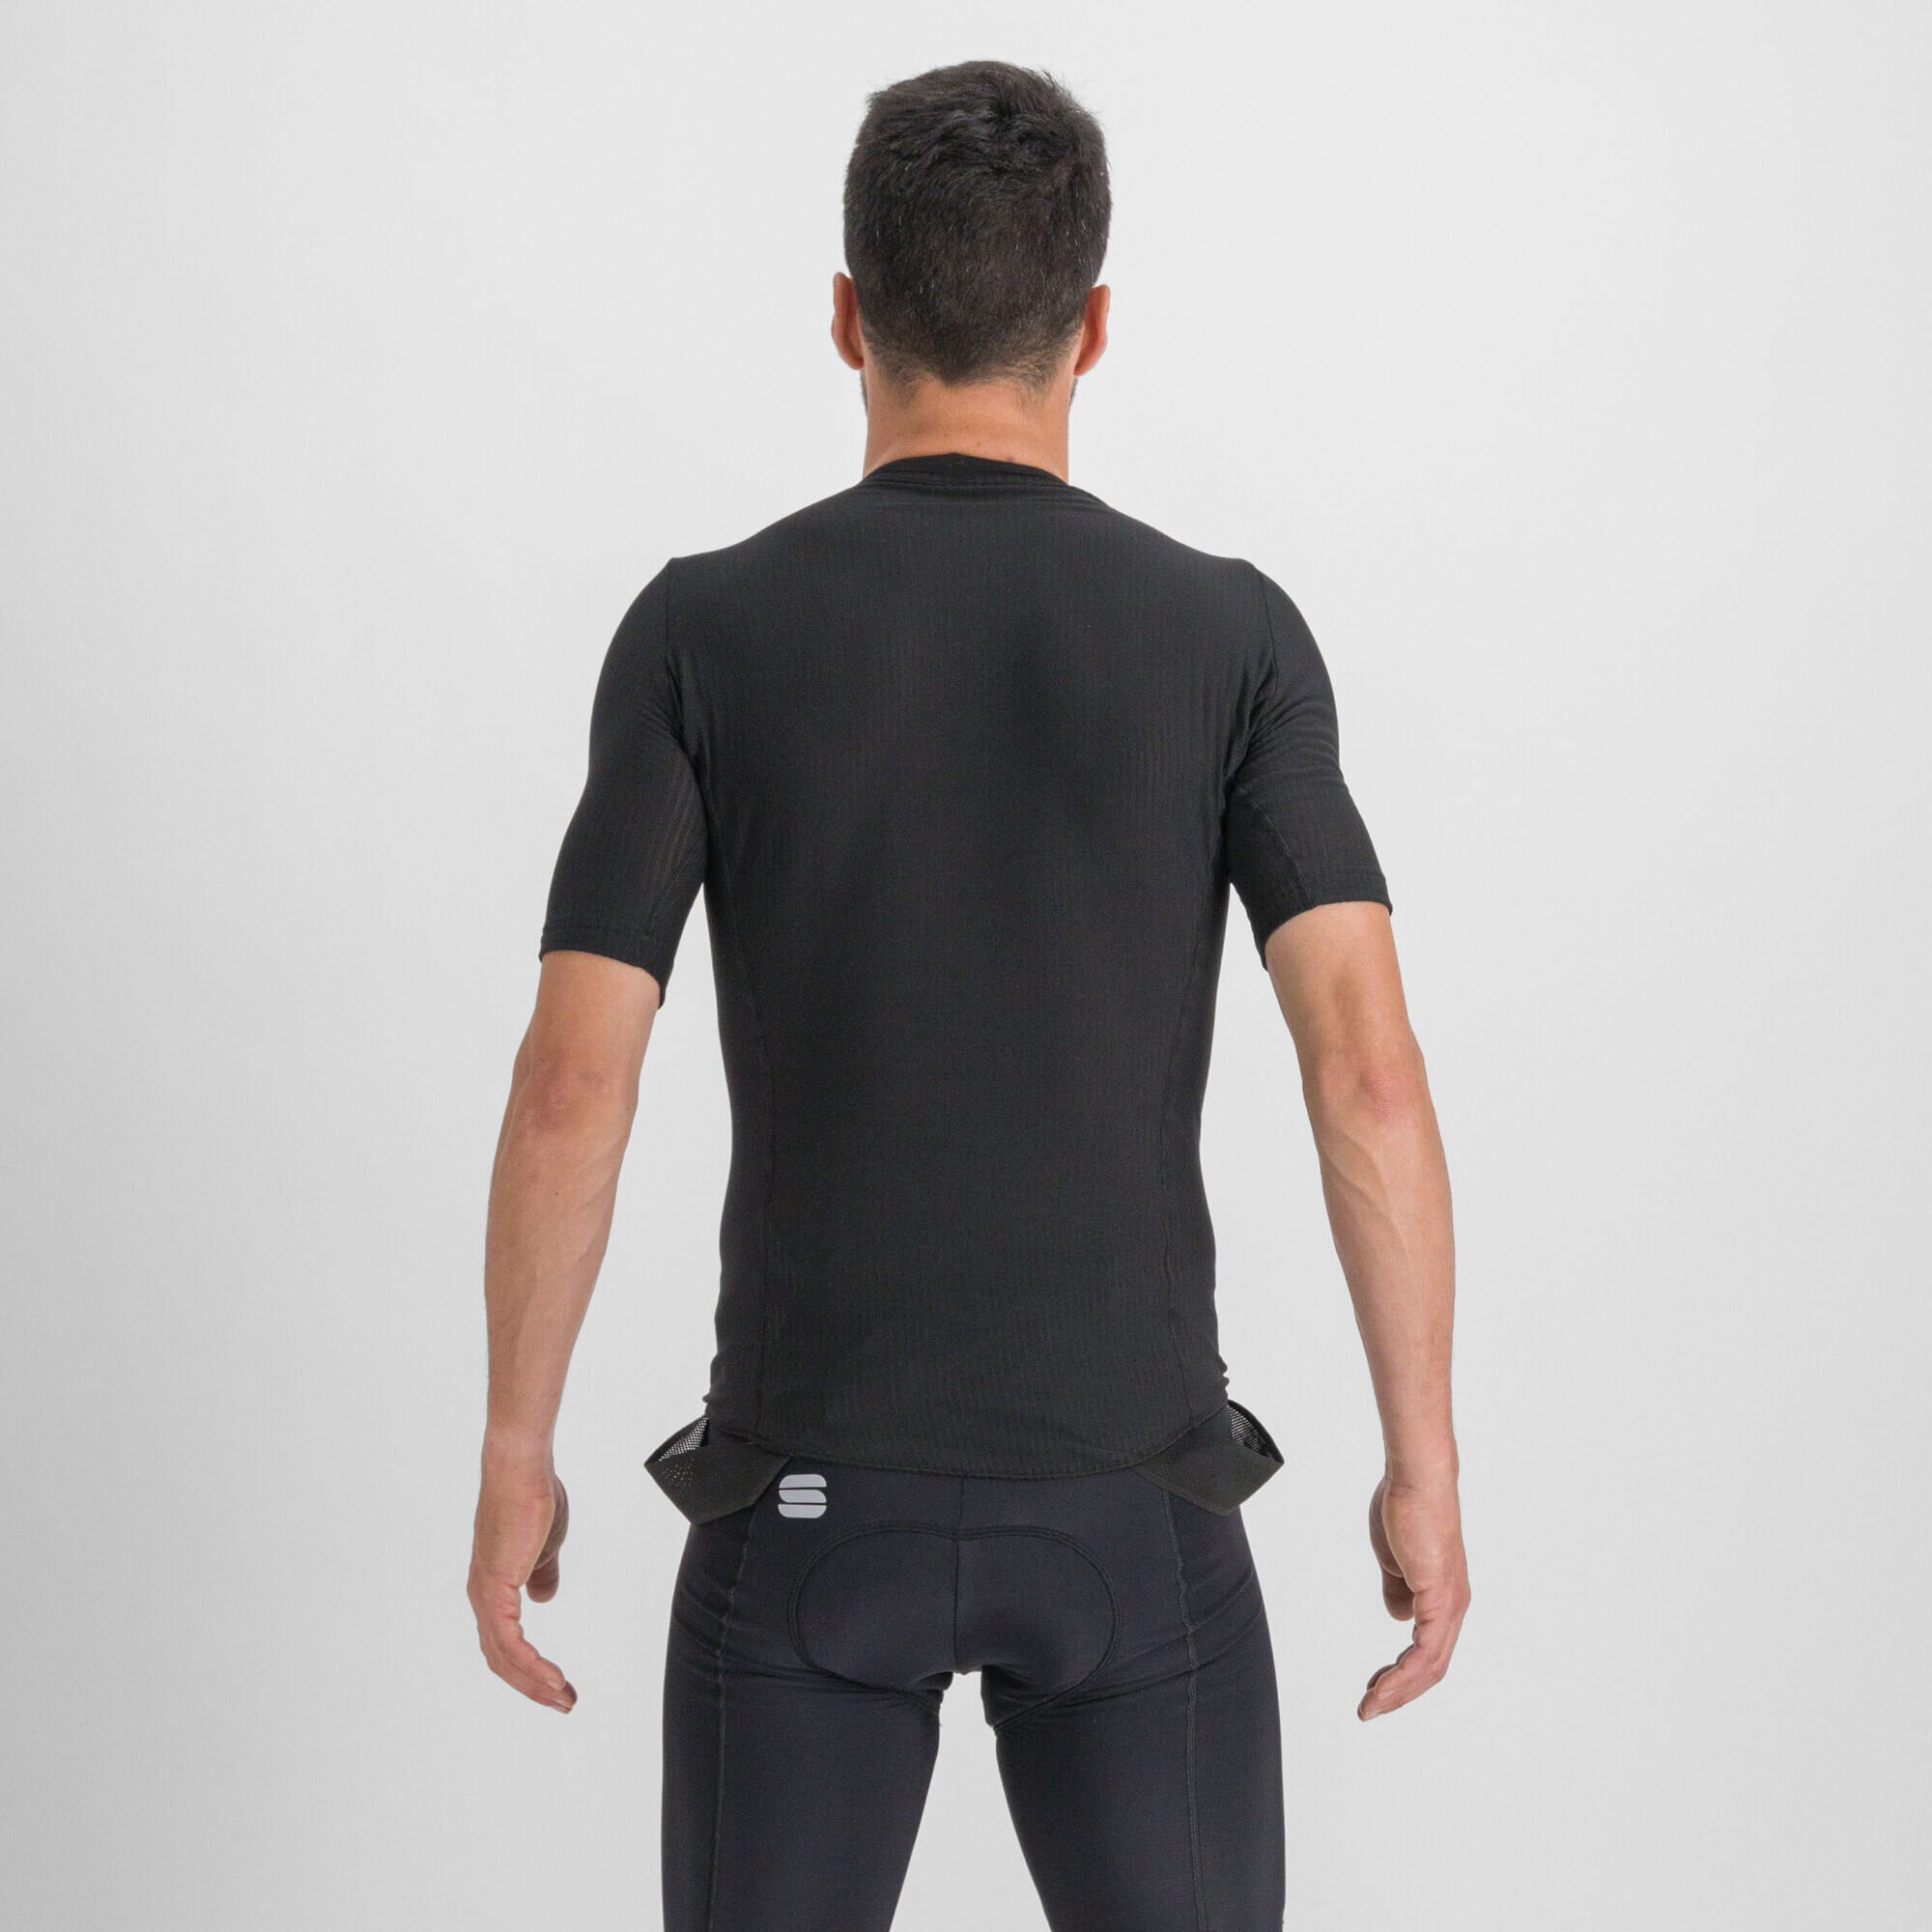 Sportful BodyFit Pro Short Sleeve Base Layer